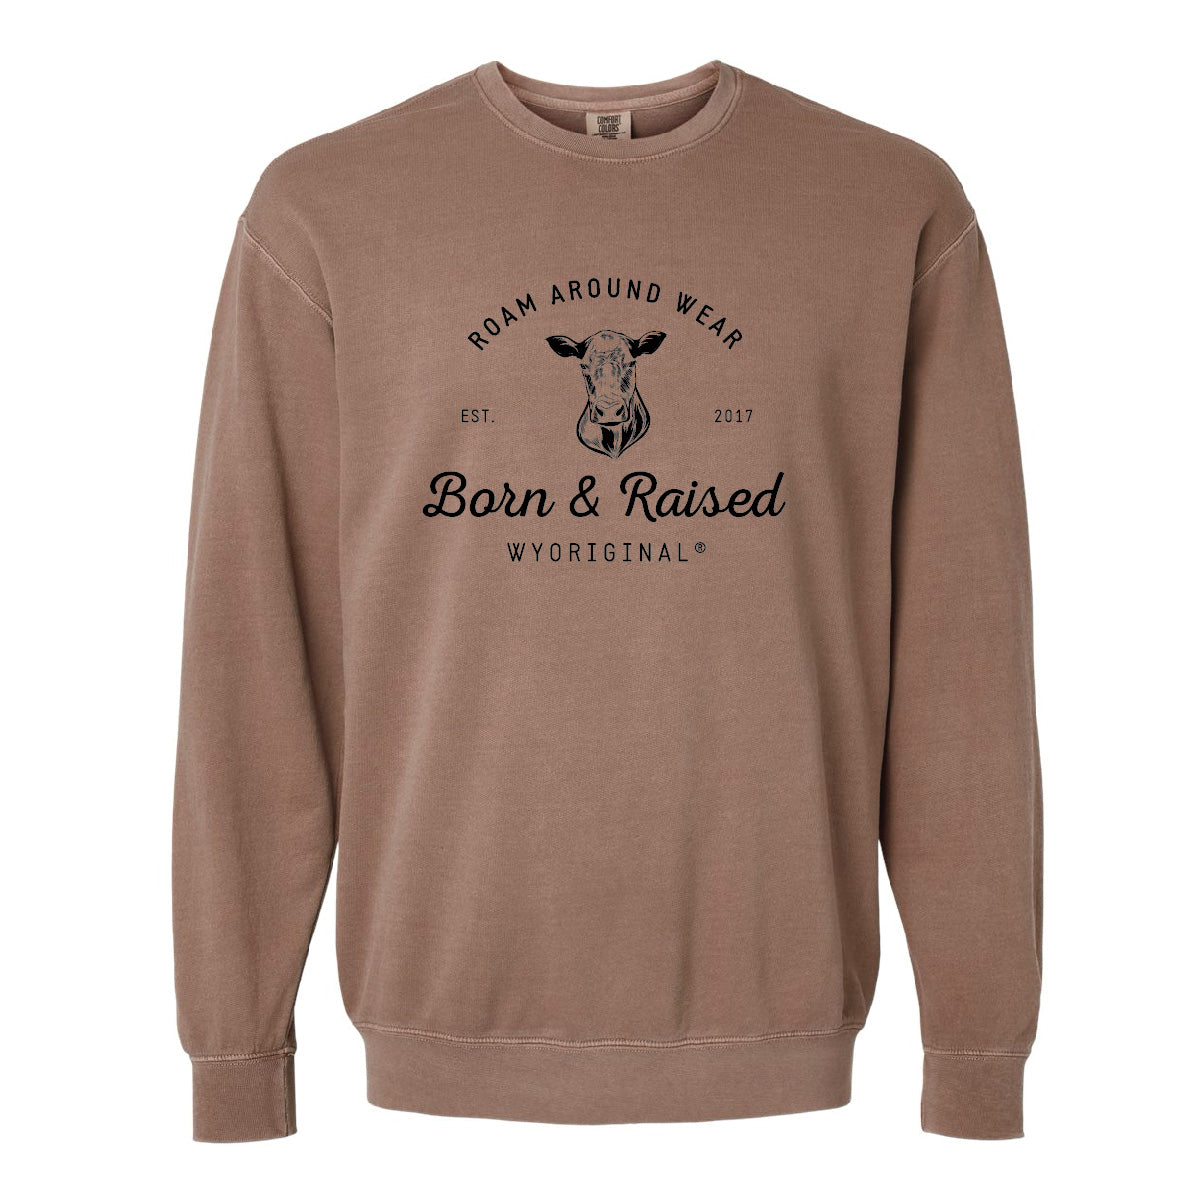 Wyoming Tee Shirt - Cow Sweatshirt - Wyoriginal Crew - Roam Around Wear is a Wyoming t-shirt company based in Gillette, Wyoming.